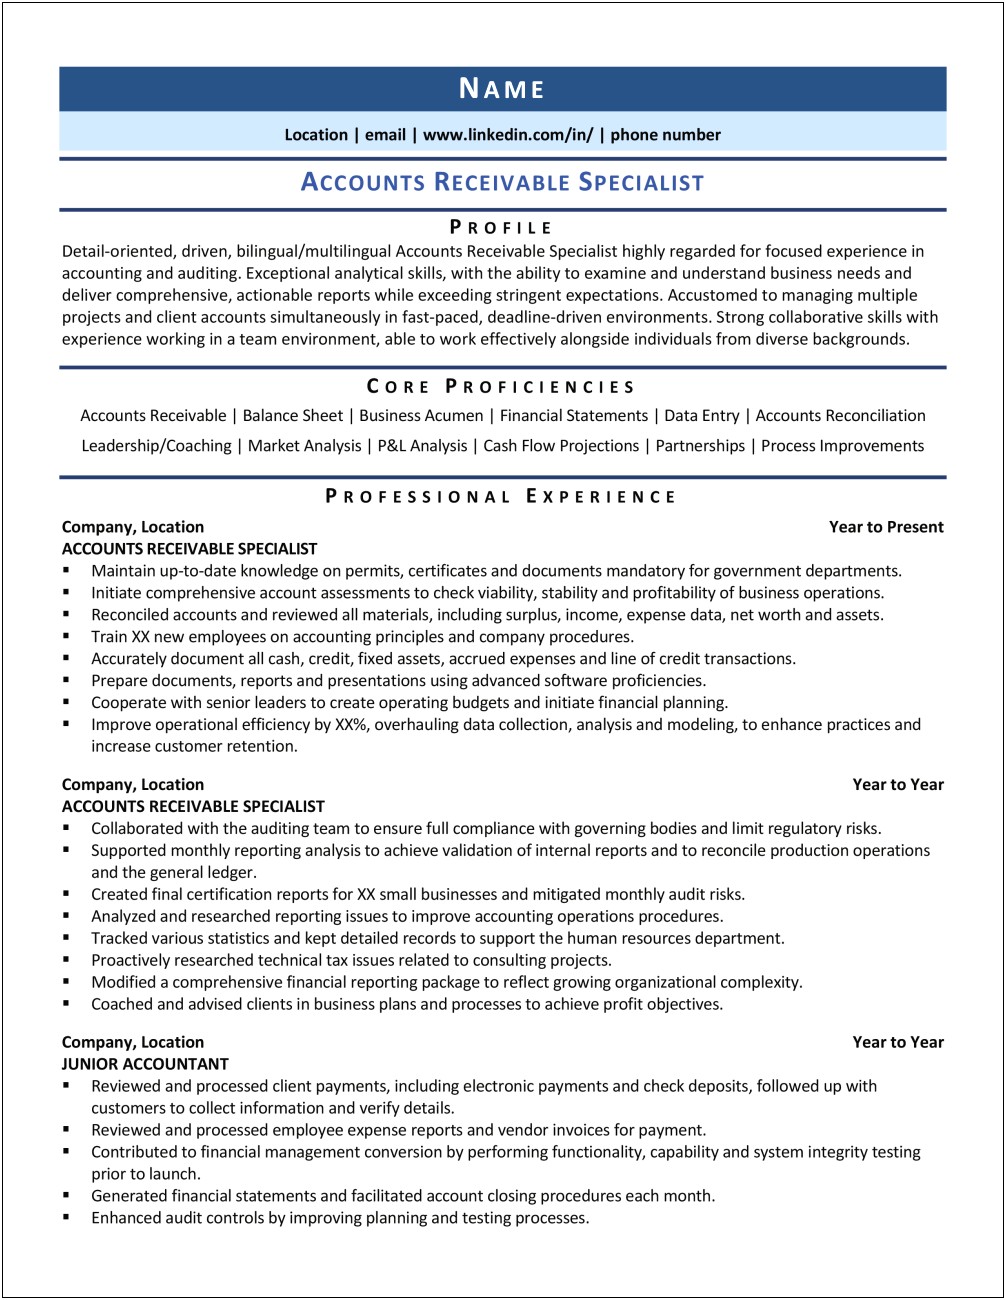 Accounts Receivable Job Resume Description